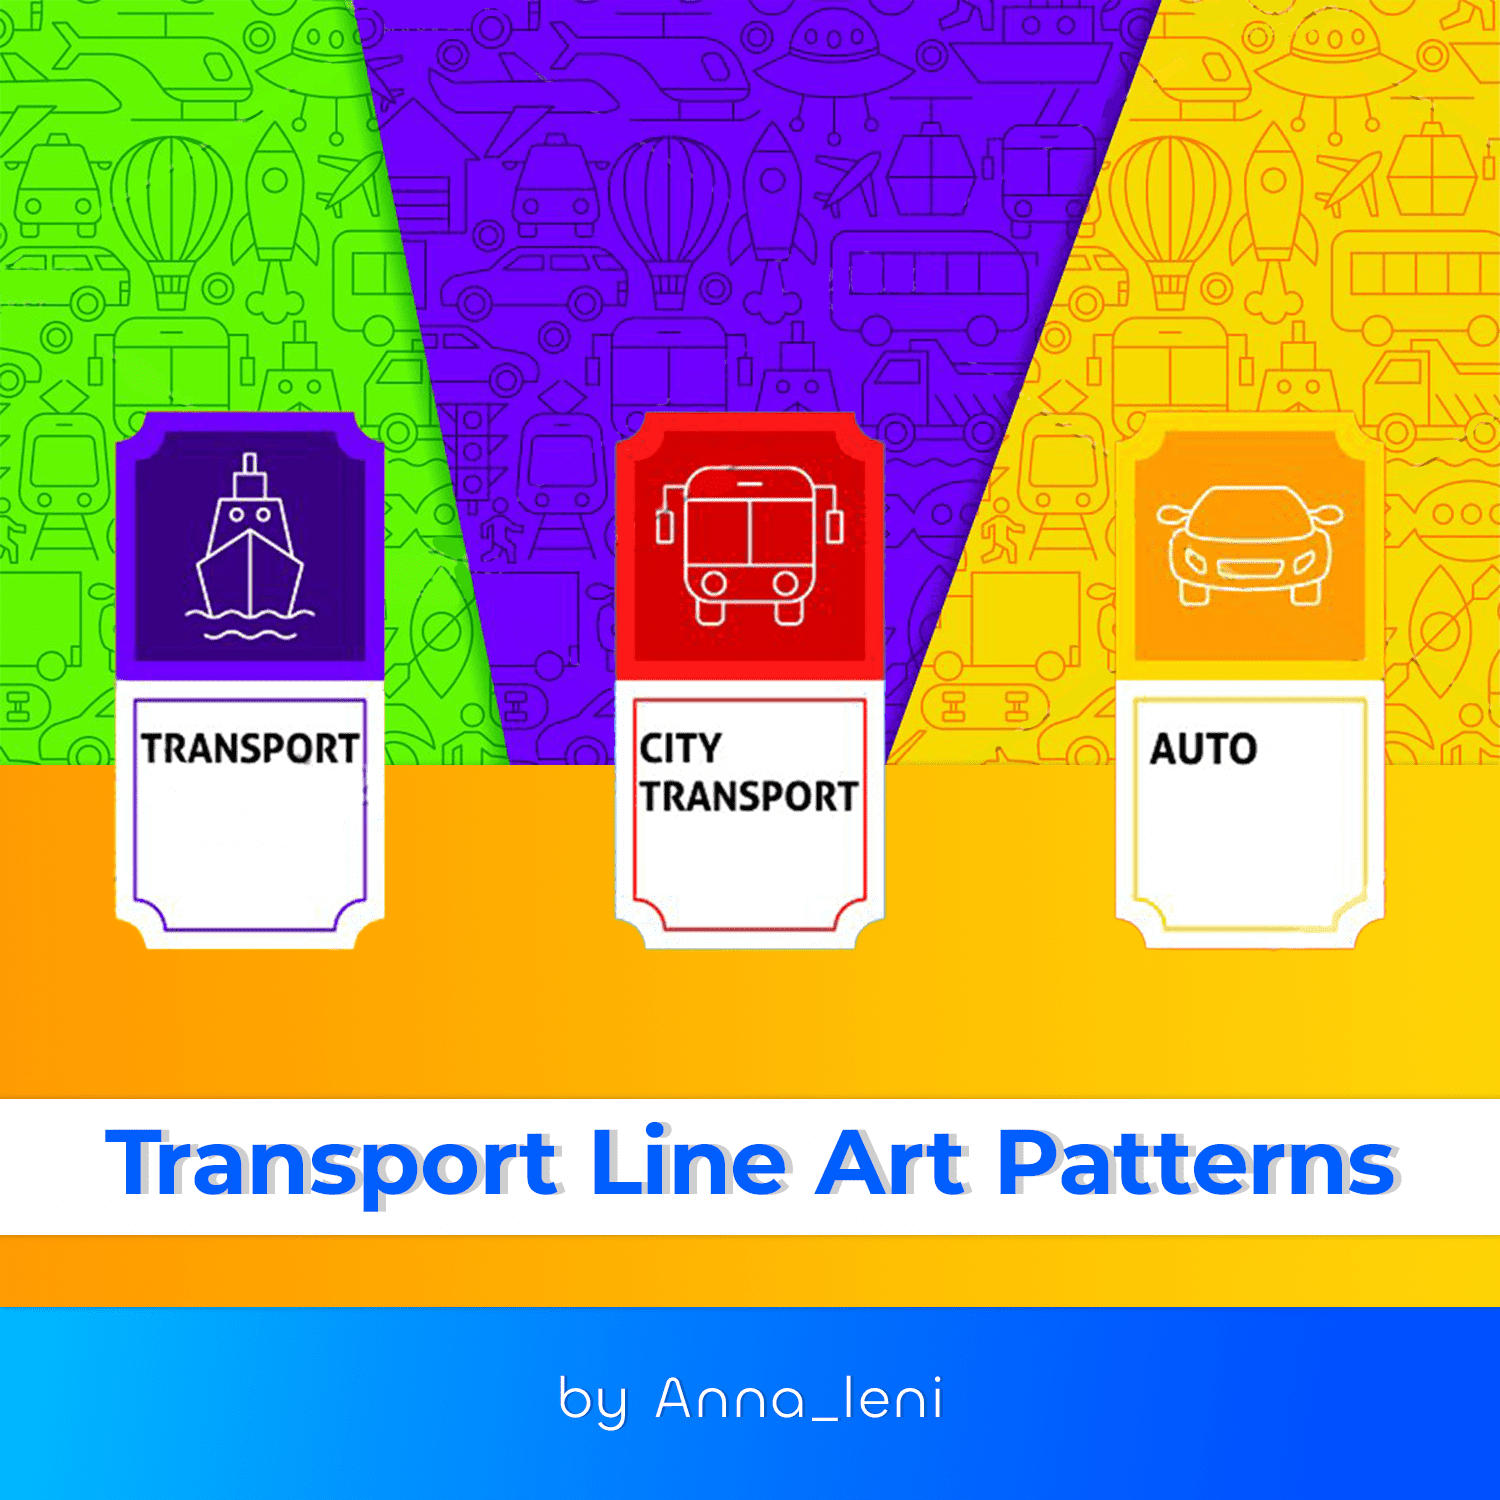 Transport Line Art Patterns cover.